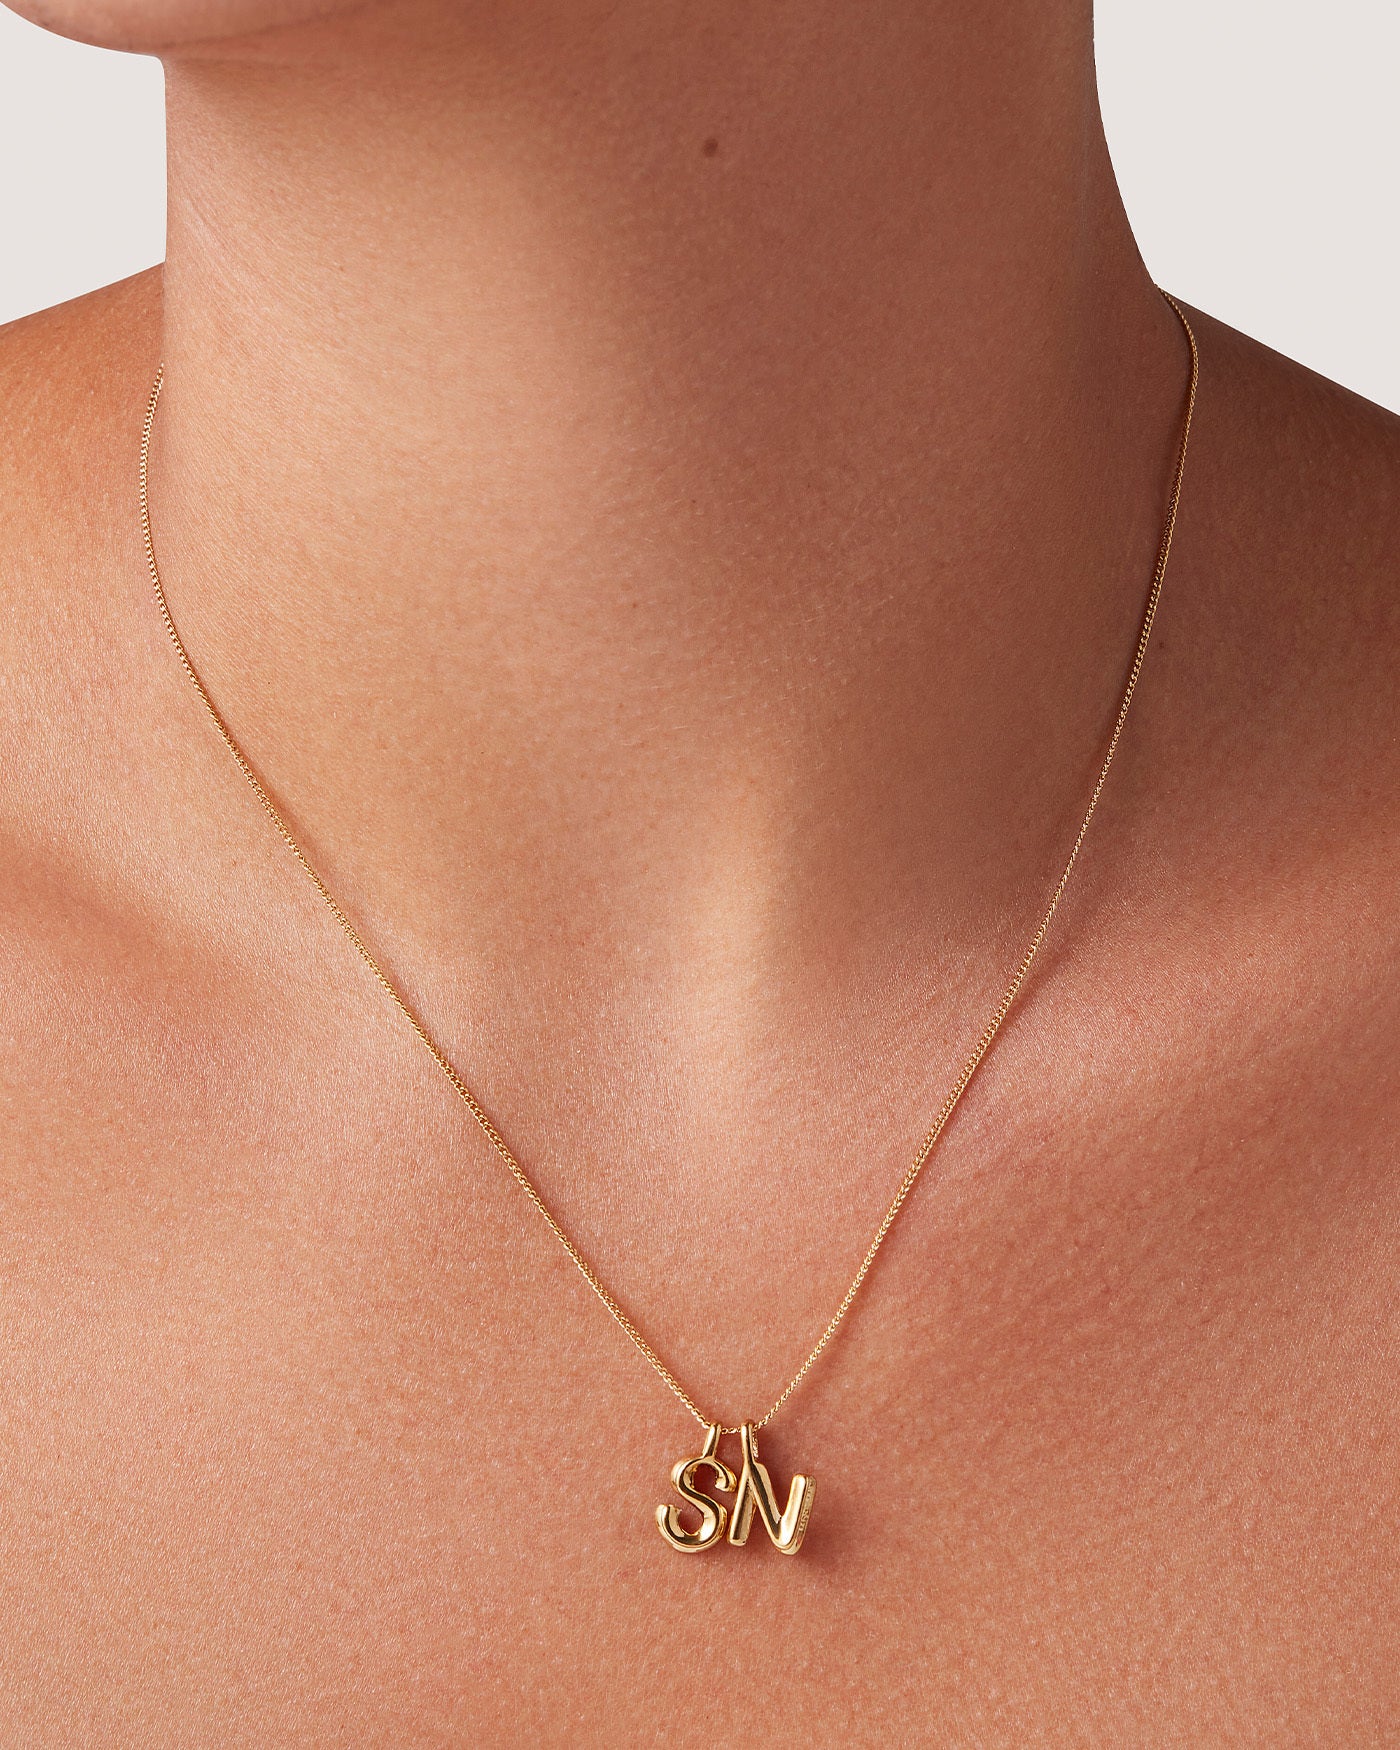 gold monogram necklace